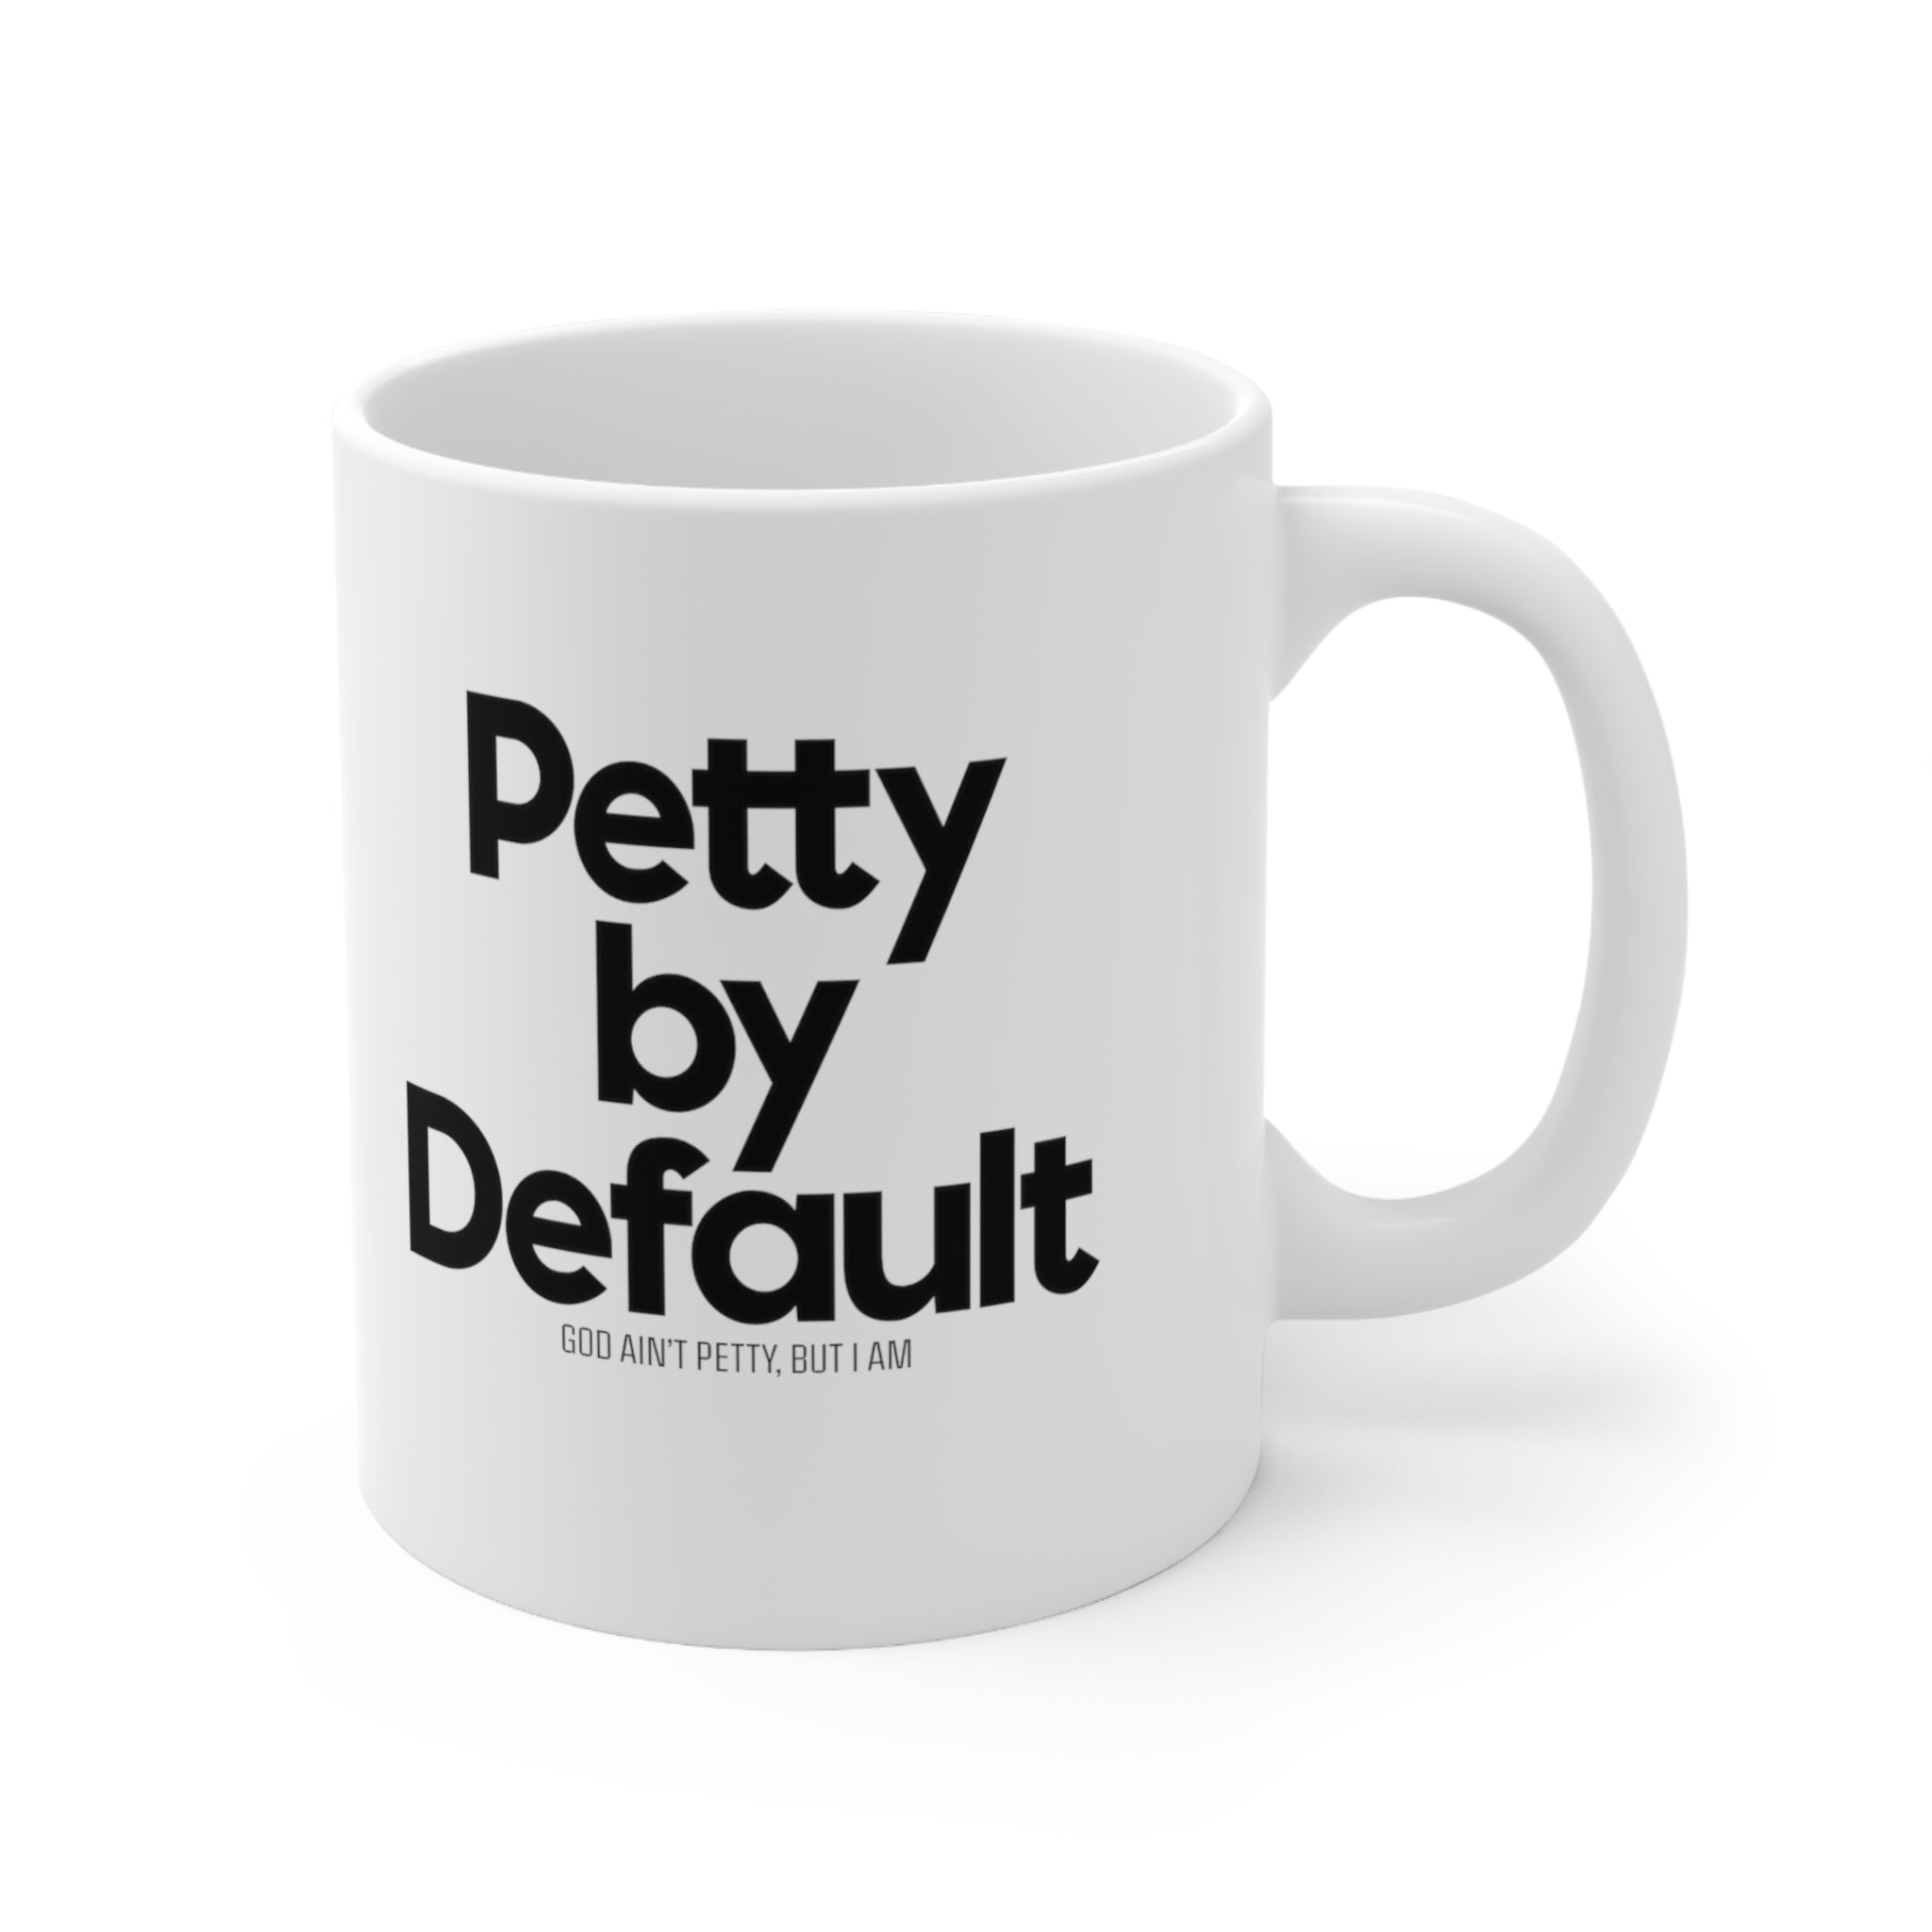 Petty by Default Mug 11oz (White/Black)-Mug-The Original God Ain't Petty But I Am